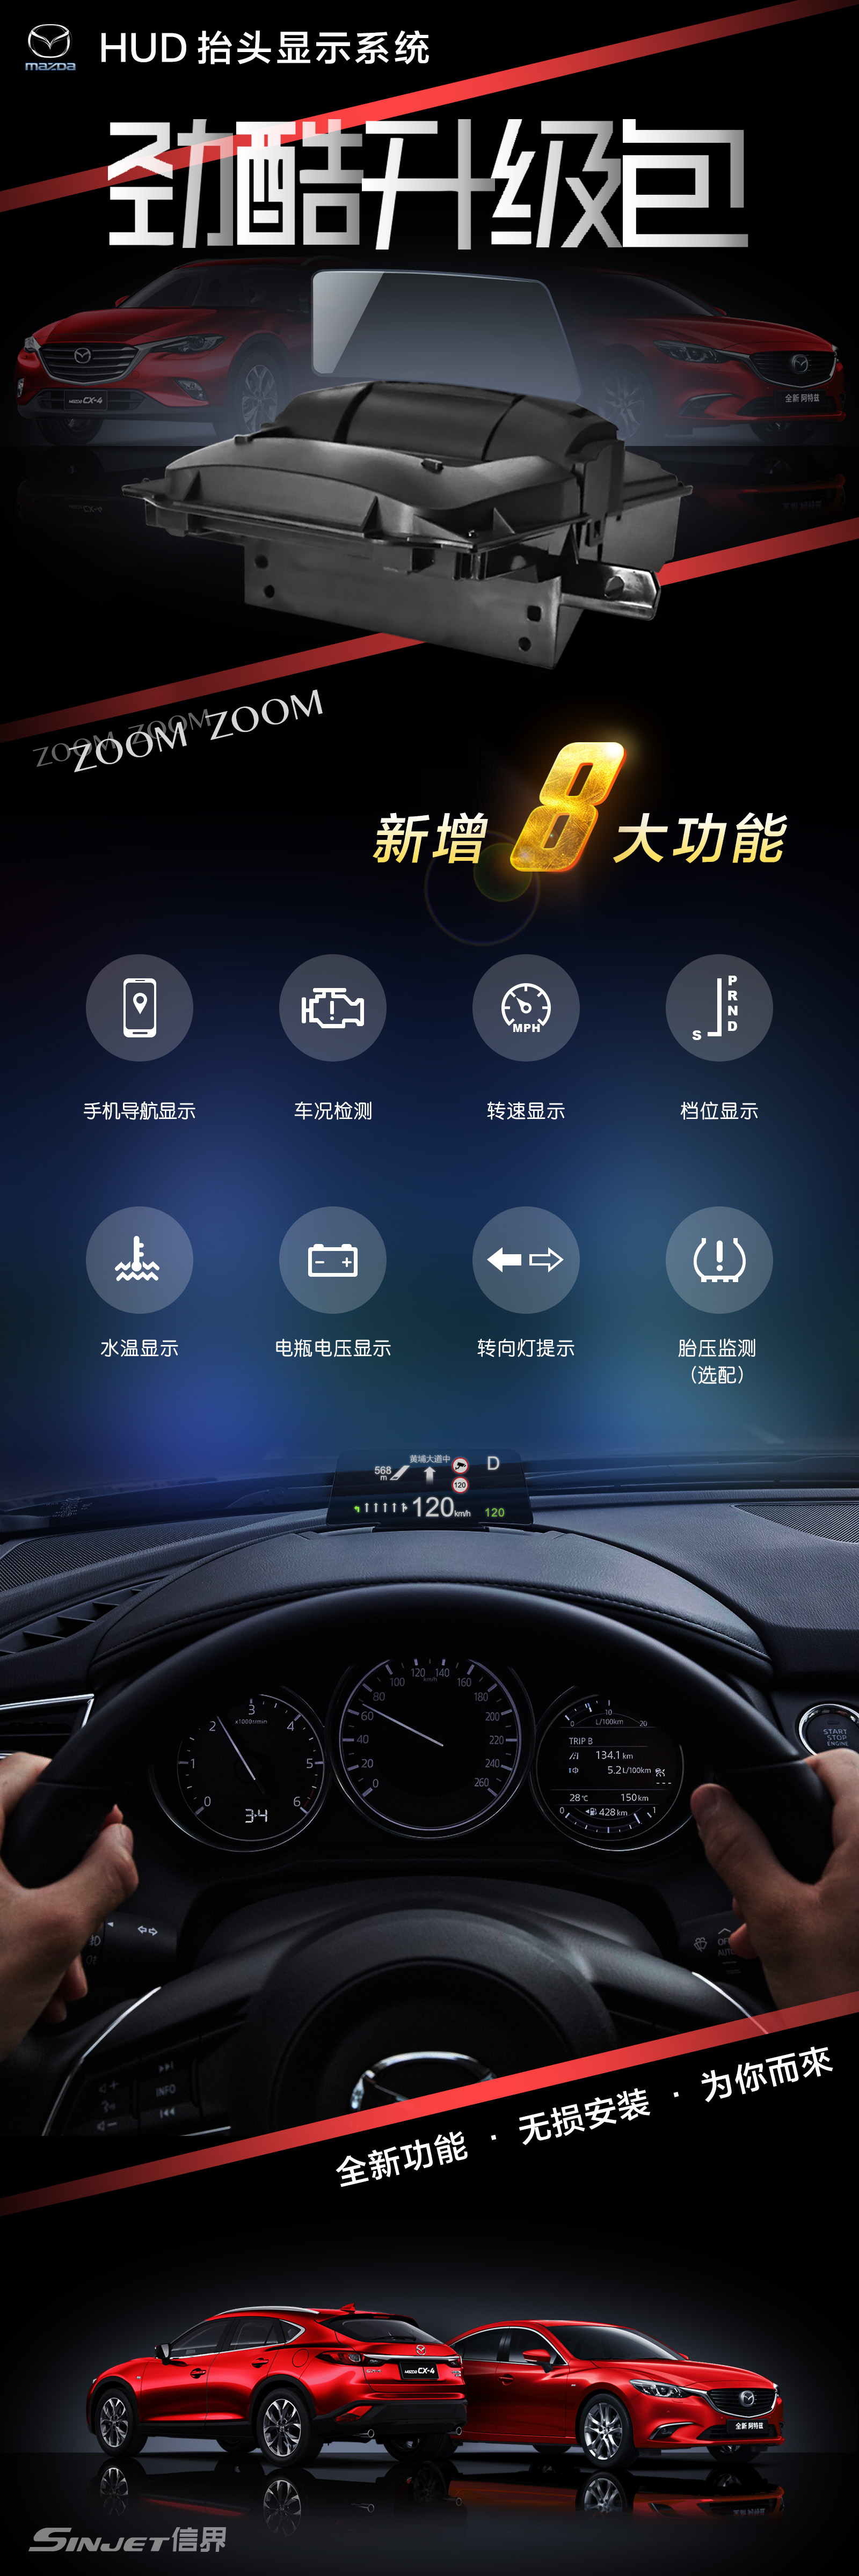 108 33 Mazda Cx 4hud Head Up Display Atz And Onksella Modified Color Head Up Display Tire Pressure From Best Taobao Agent Taobao International International Ecommerce Newbecca Com